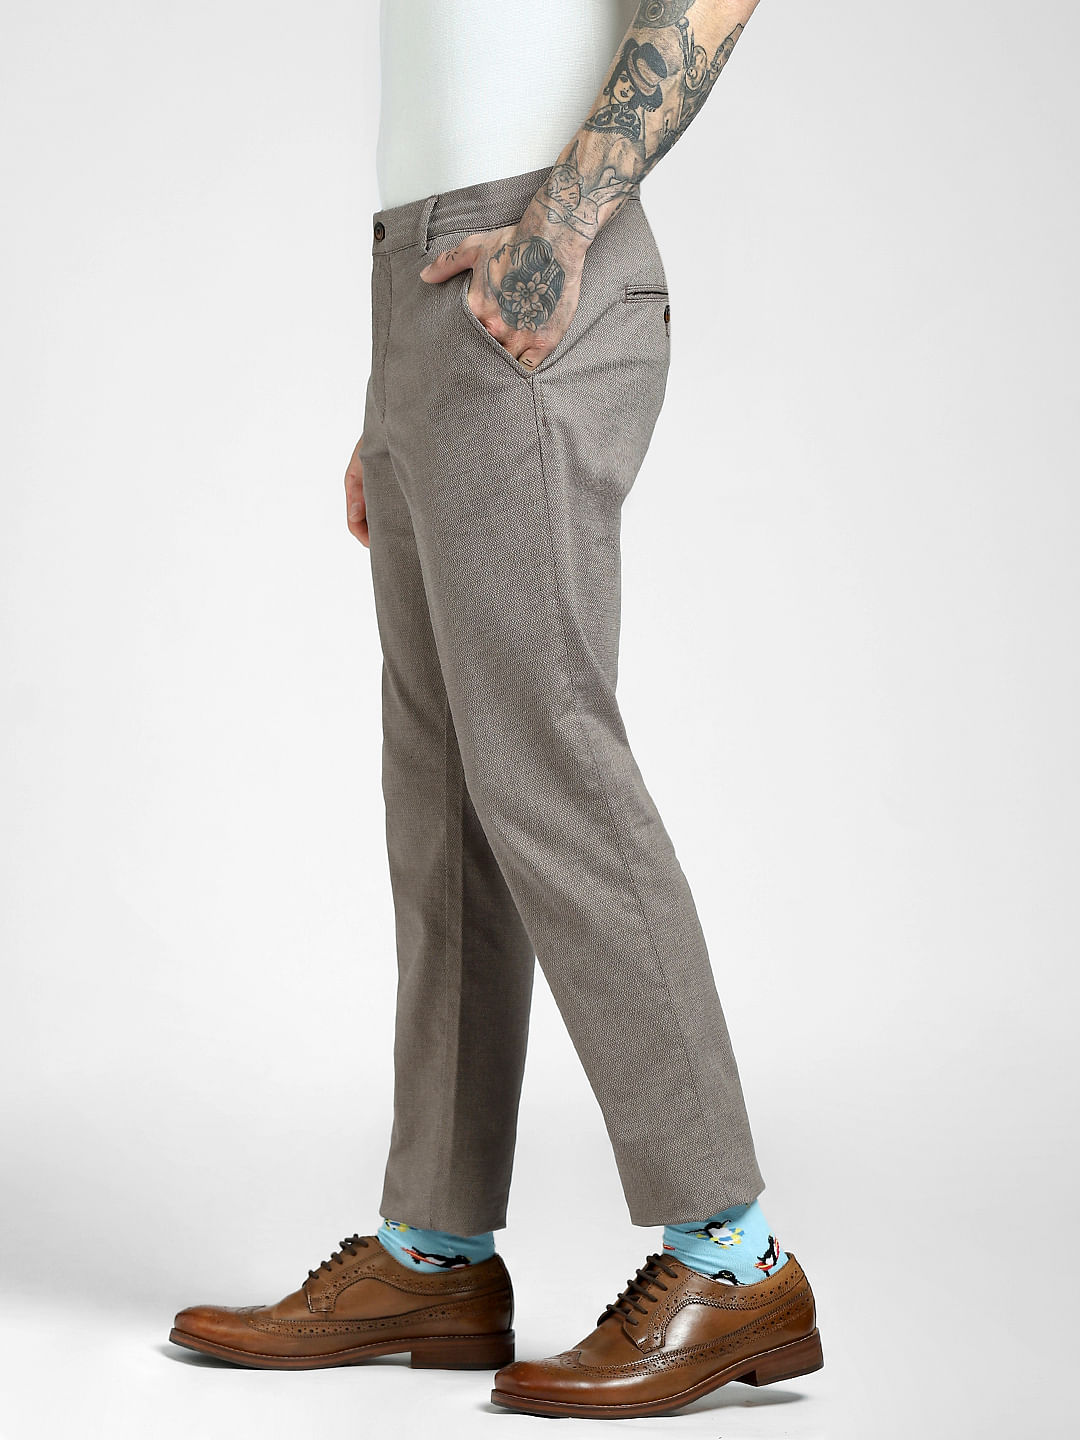 Labakihah Cargo Pants for Men Mens Fashion Casual Pure Colour Jeans with  Zipper Pocket Jeans Trousers Light Blue XL - Walmart.com